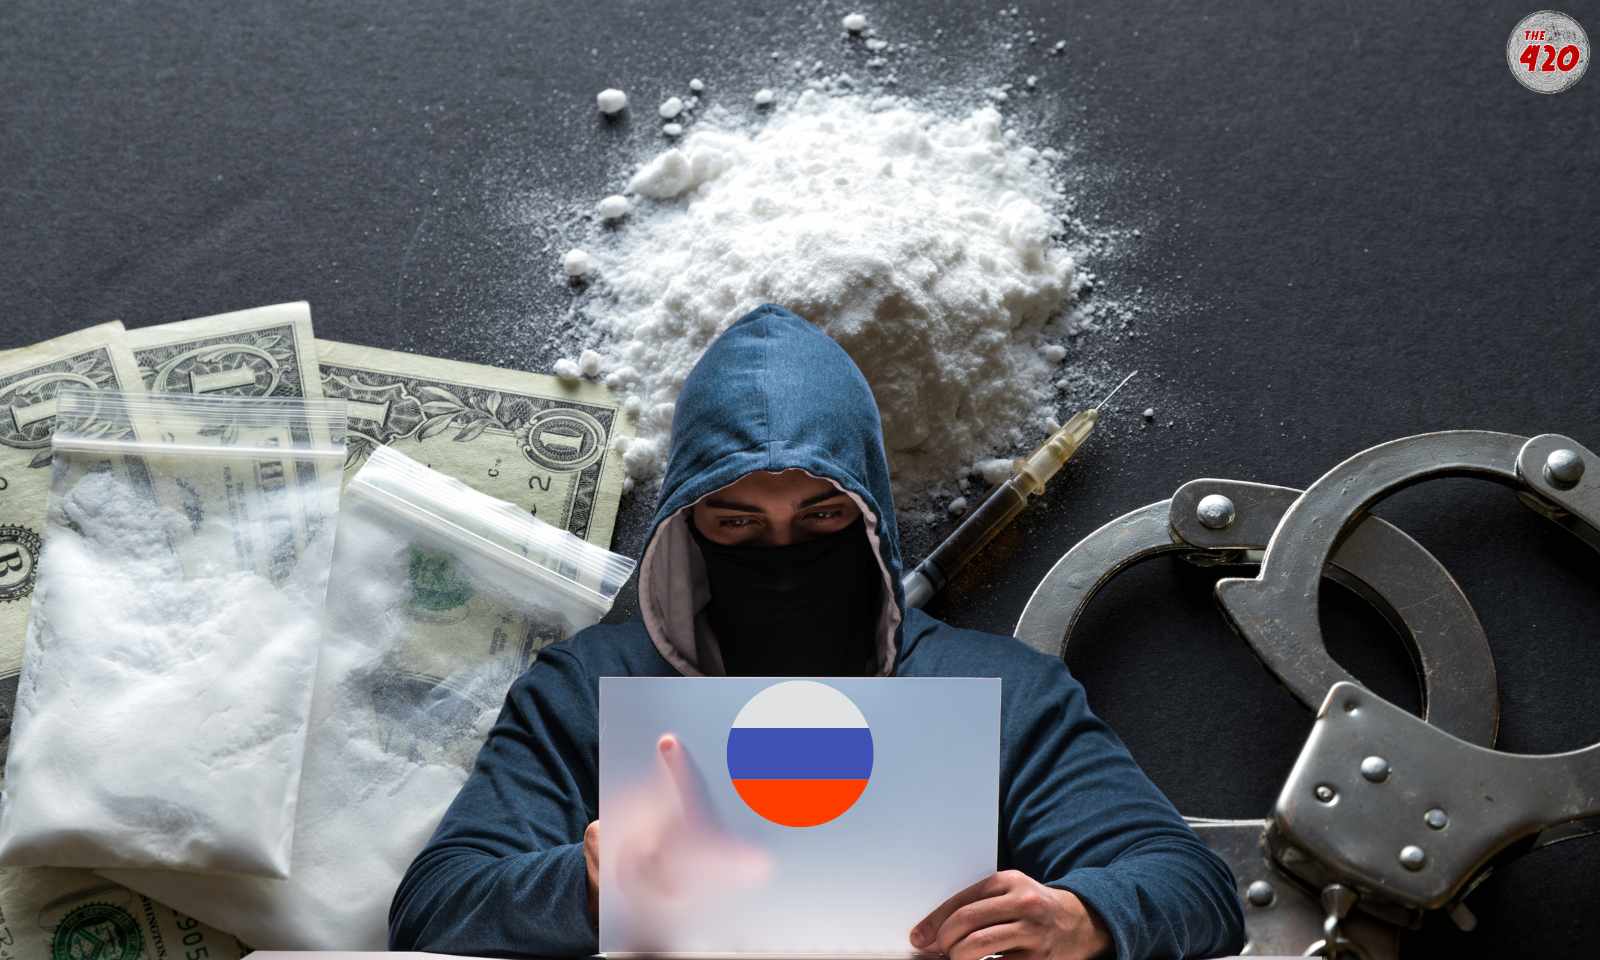 Russian Dark Net Markets Control 80% of Illicit Drug Sales: Report